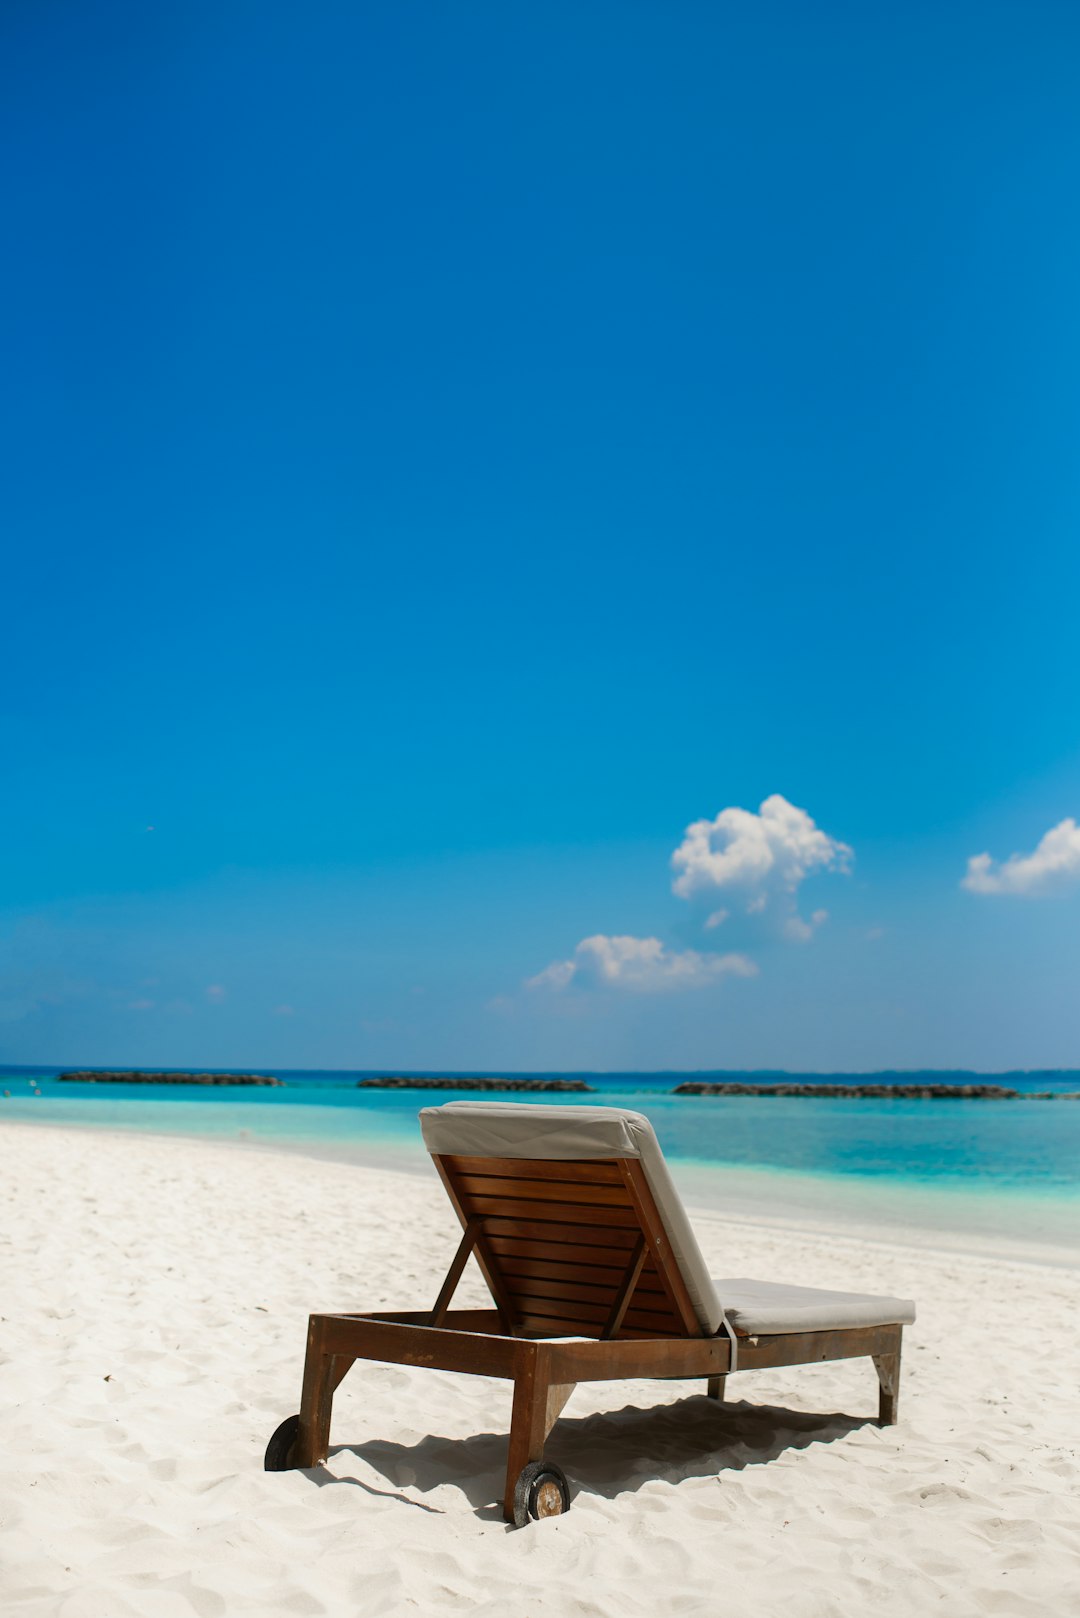 Beach photo spot Bandos Maldives Madivaru Finolhu